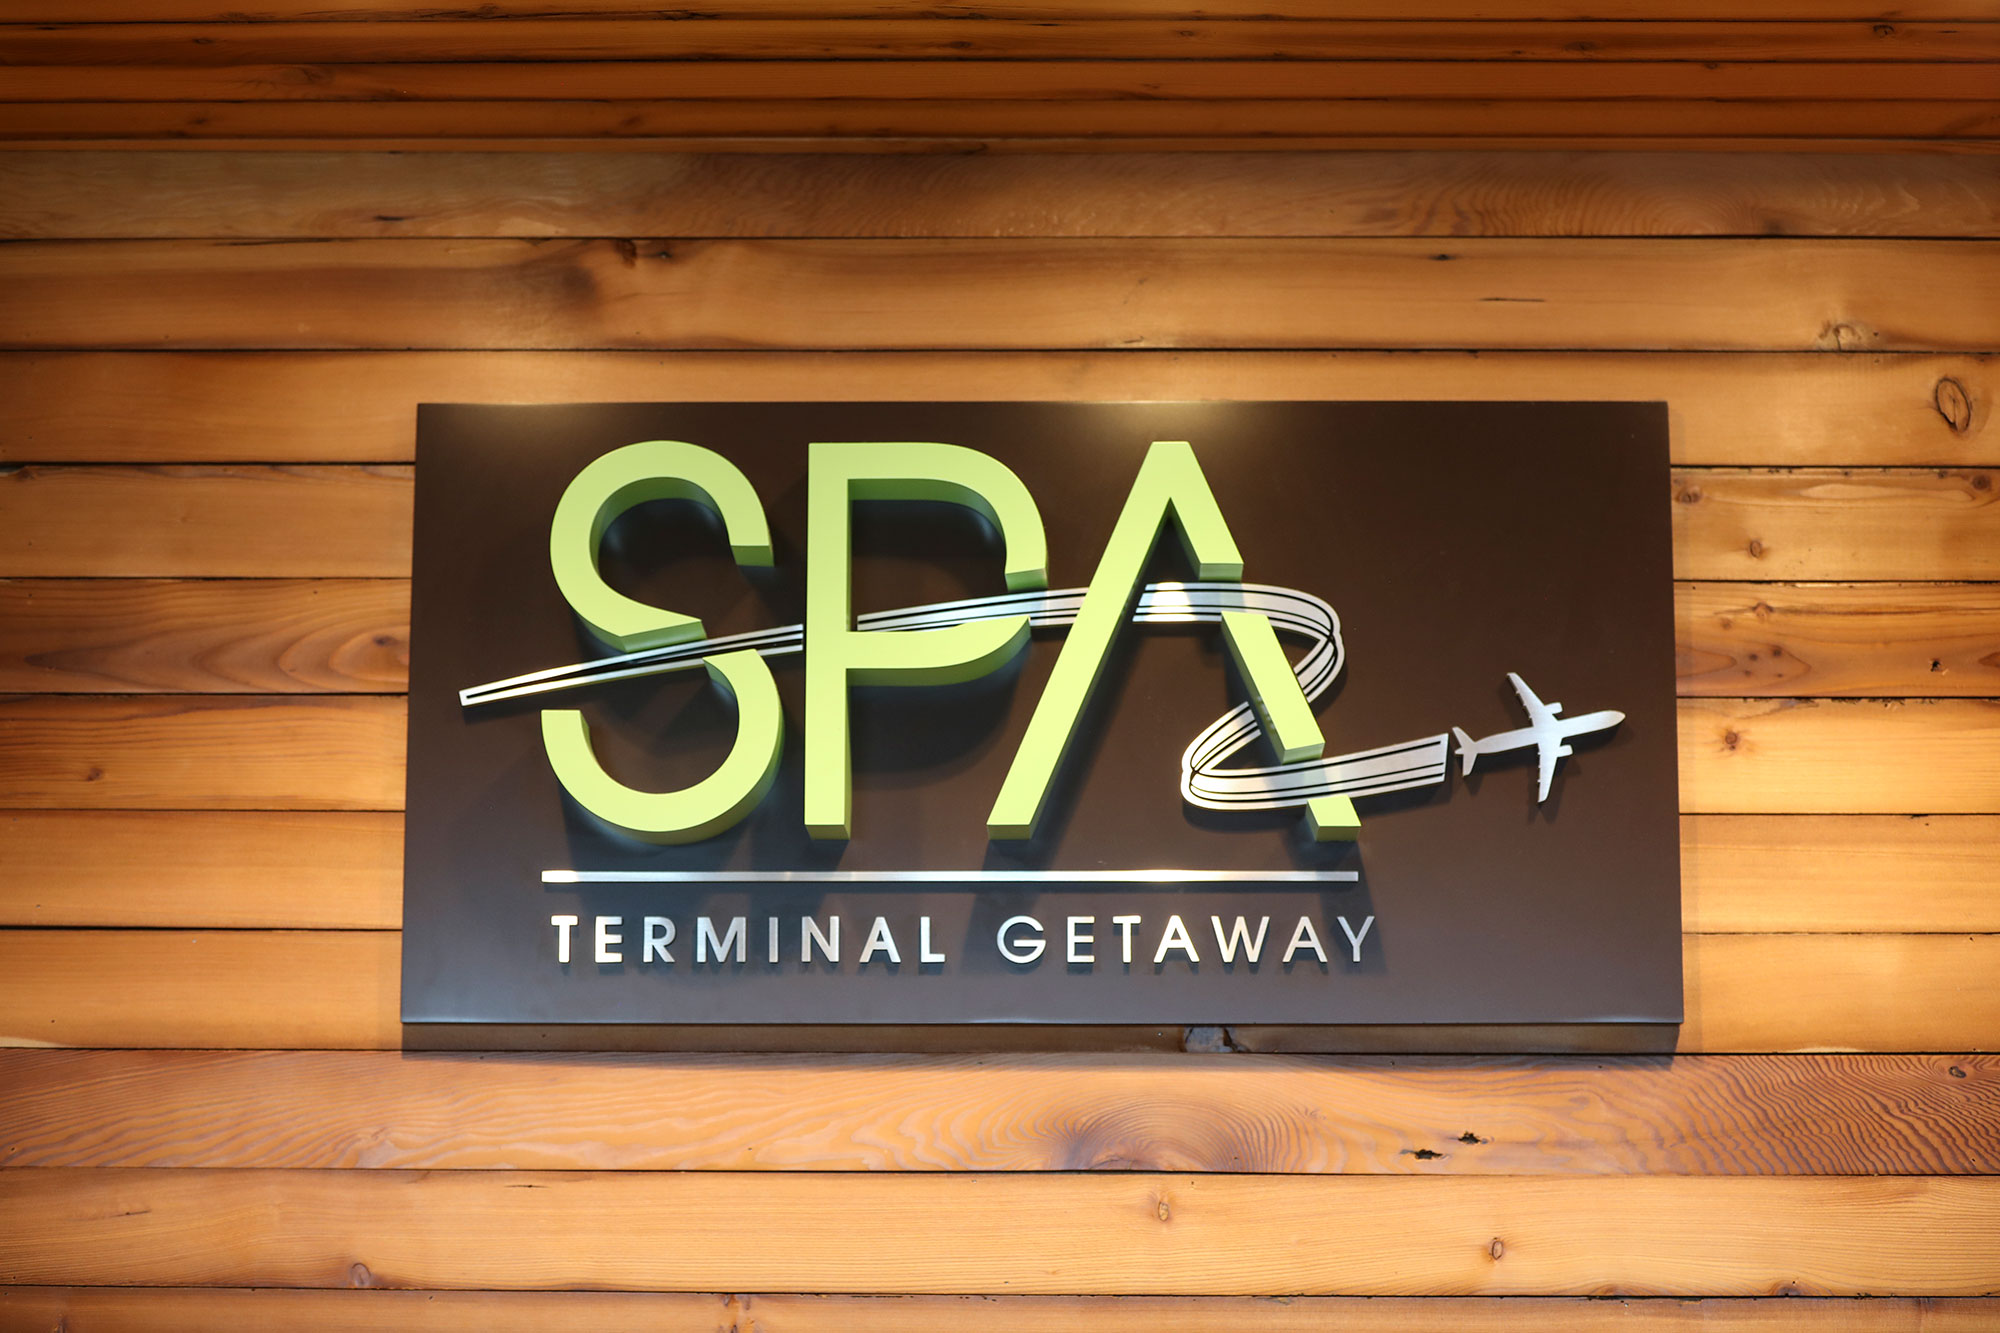 SEA Spa Terminal Getaway Spa (A Gates) Sign